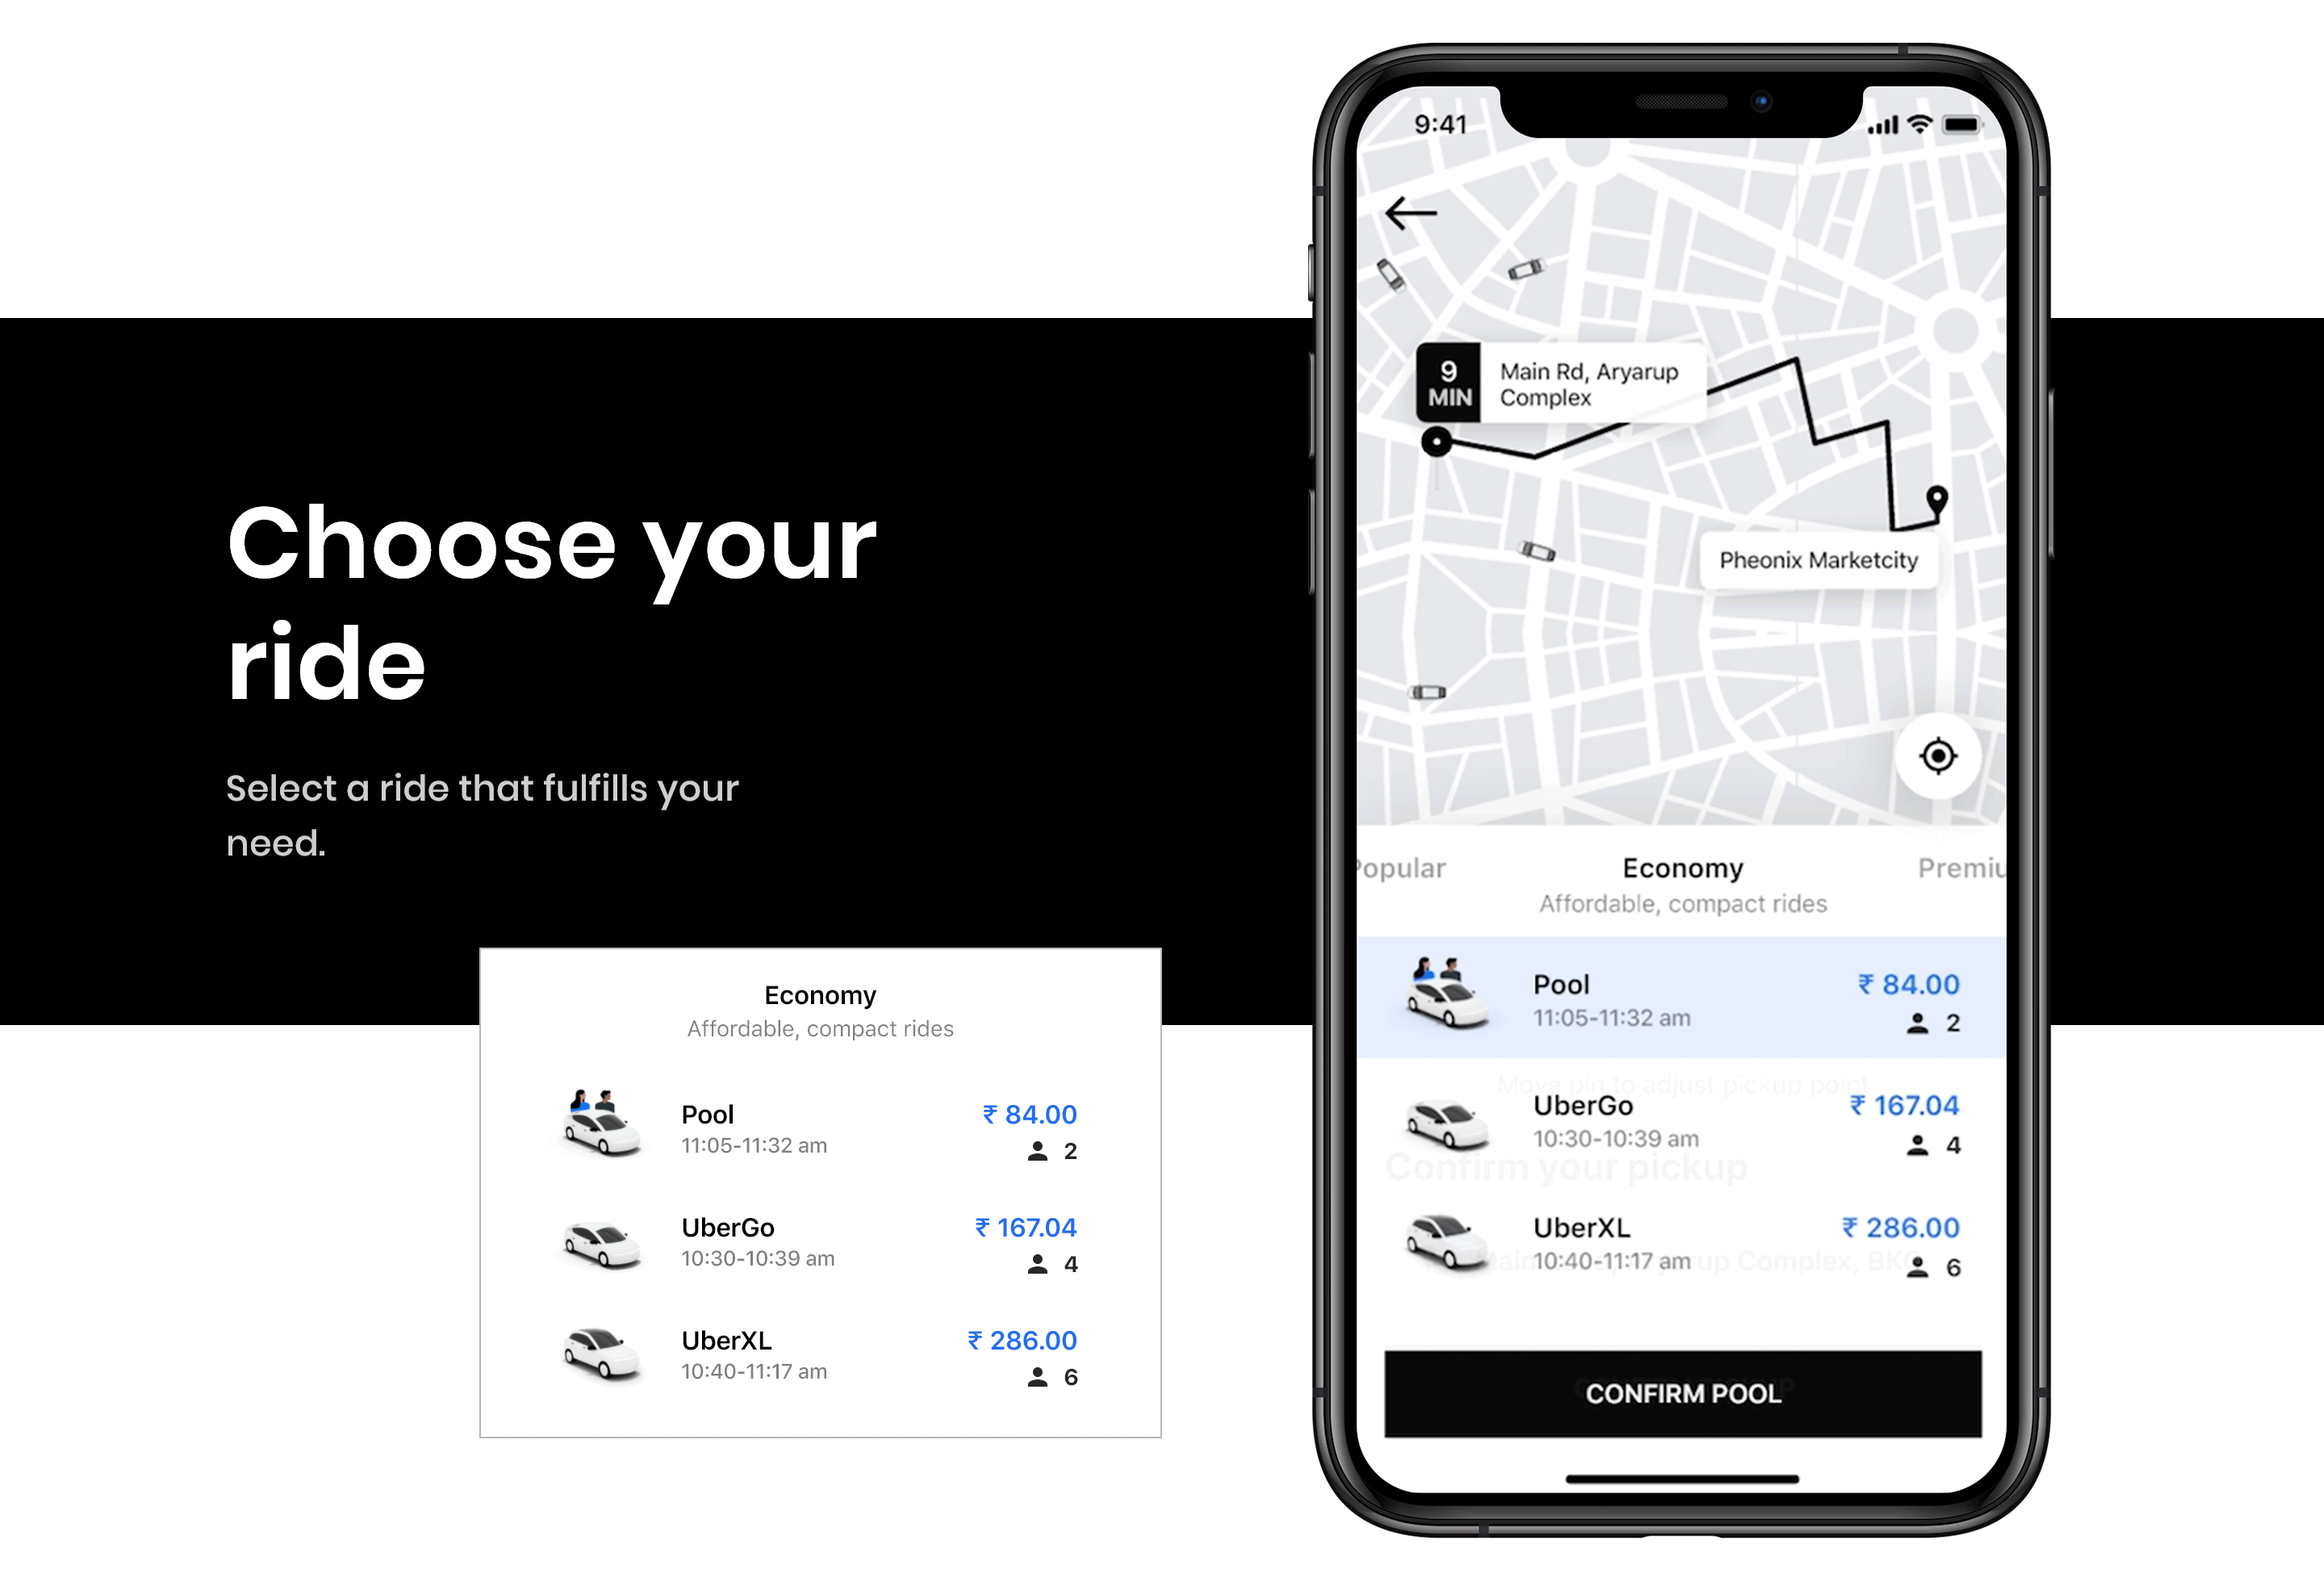 Uber's sleek user interface